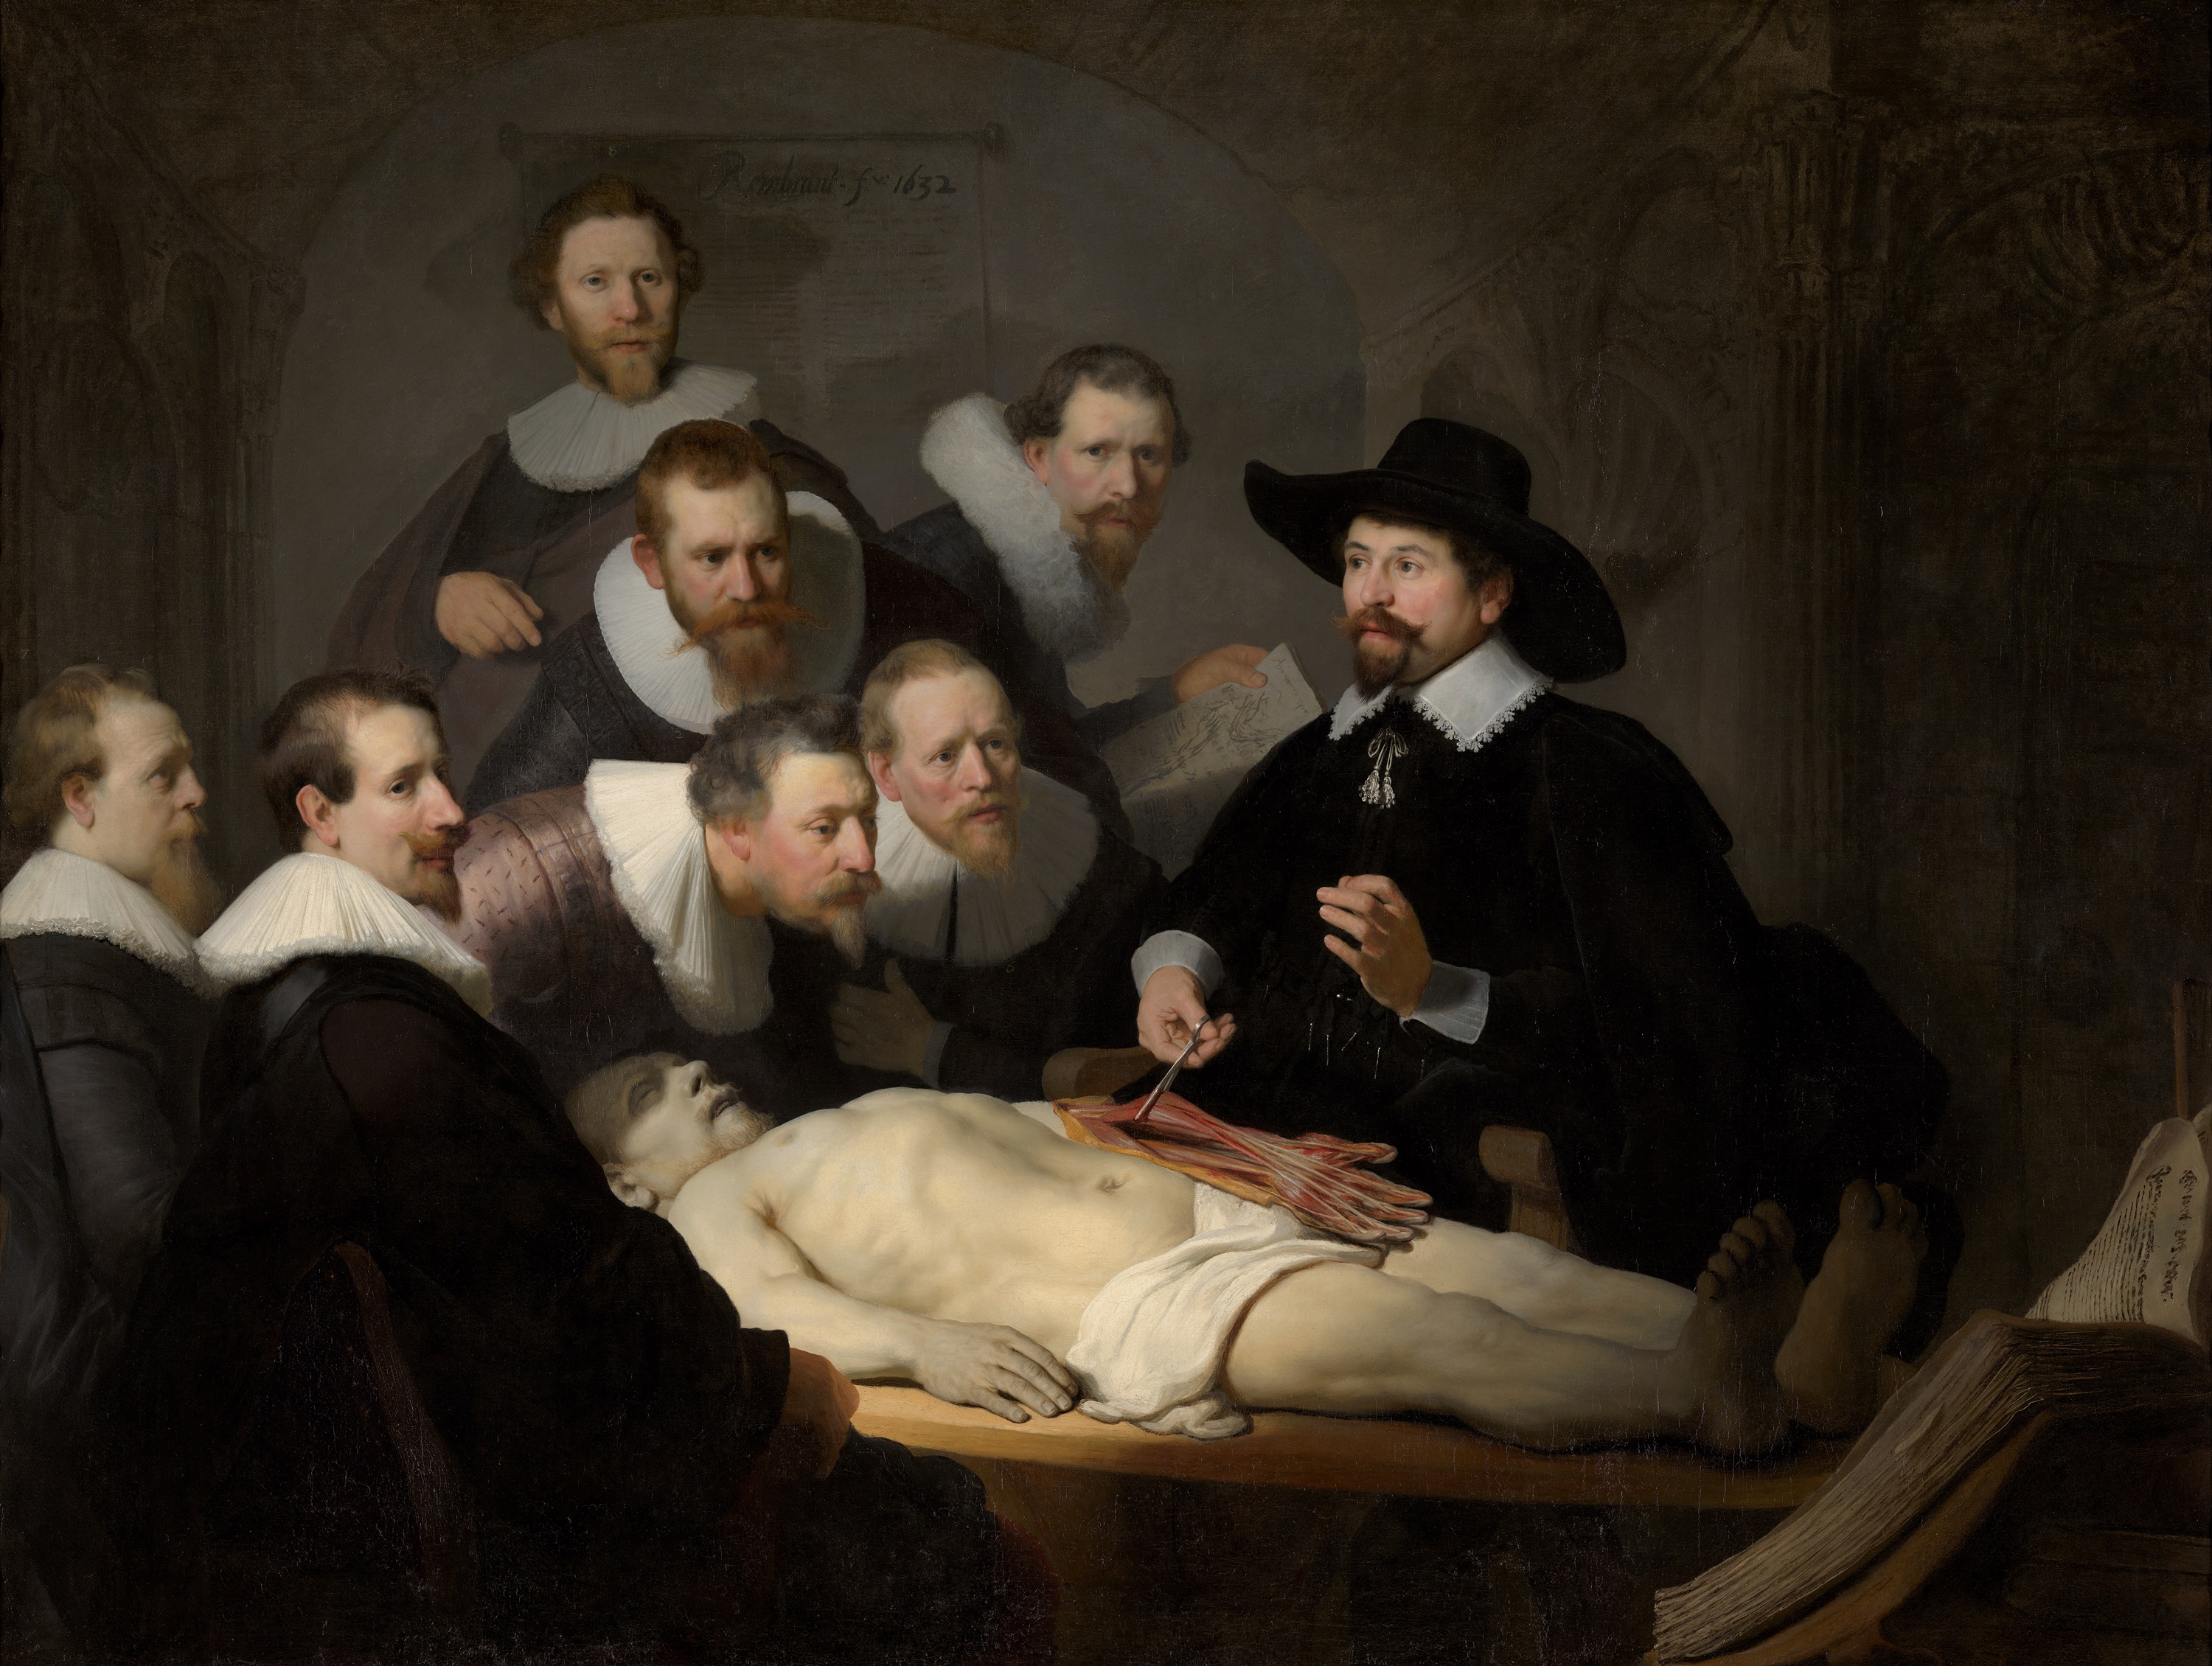 Lecția de Anatomie cu Dr. Nicolaes Tulp by Rembrandt van Rijn - 1632 - 170 x 270 cm 